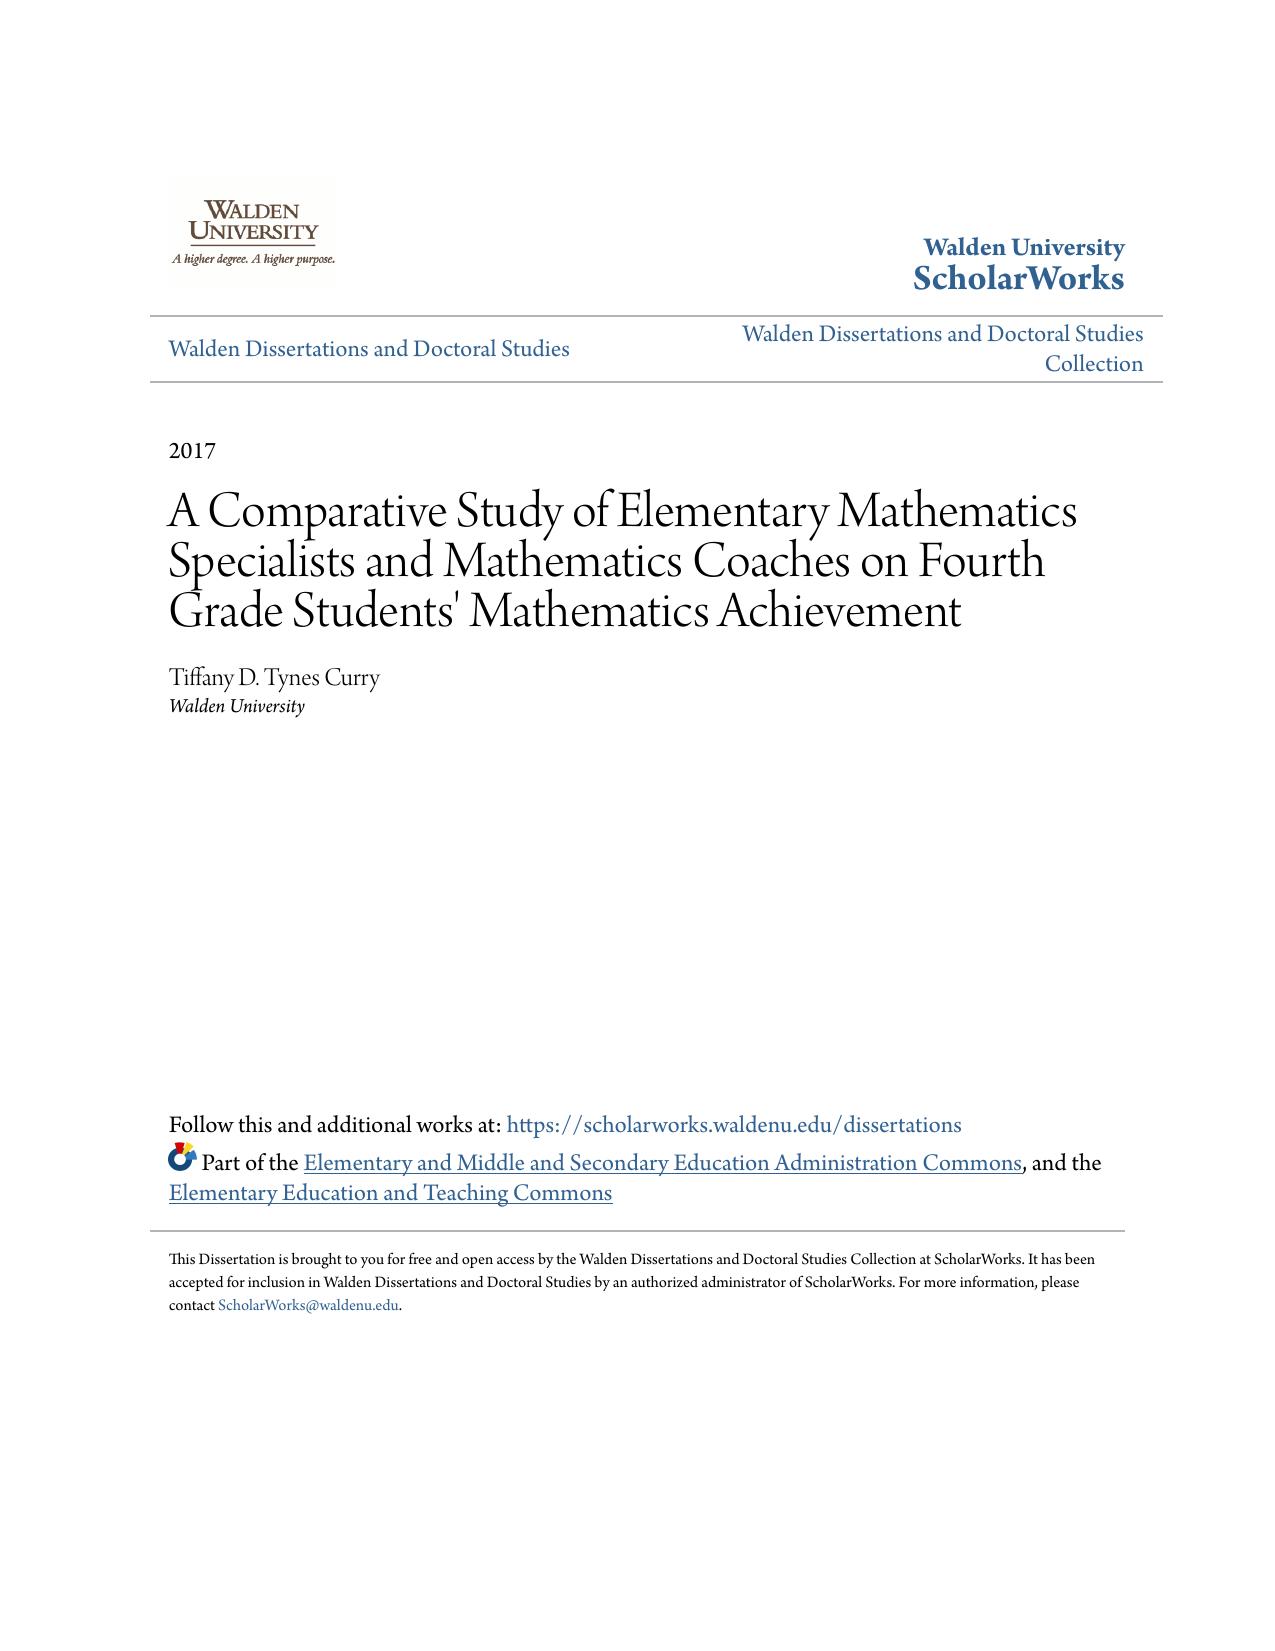 A Comparative Study of Elementary Mathematics Specialists and Mathematics Coaches on Fourth Grade Students' Mathematics Achievement